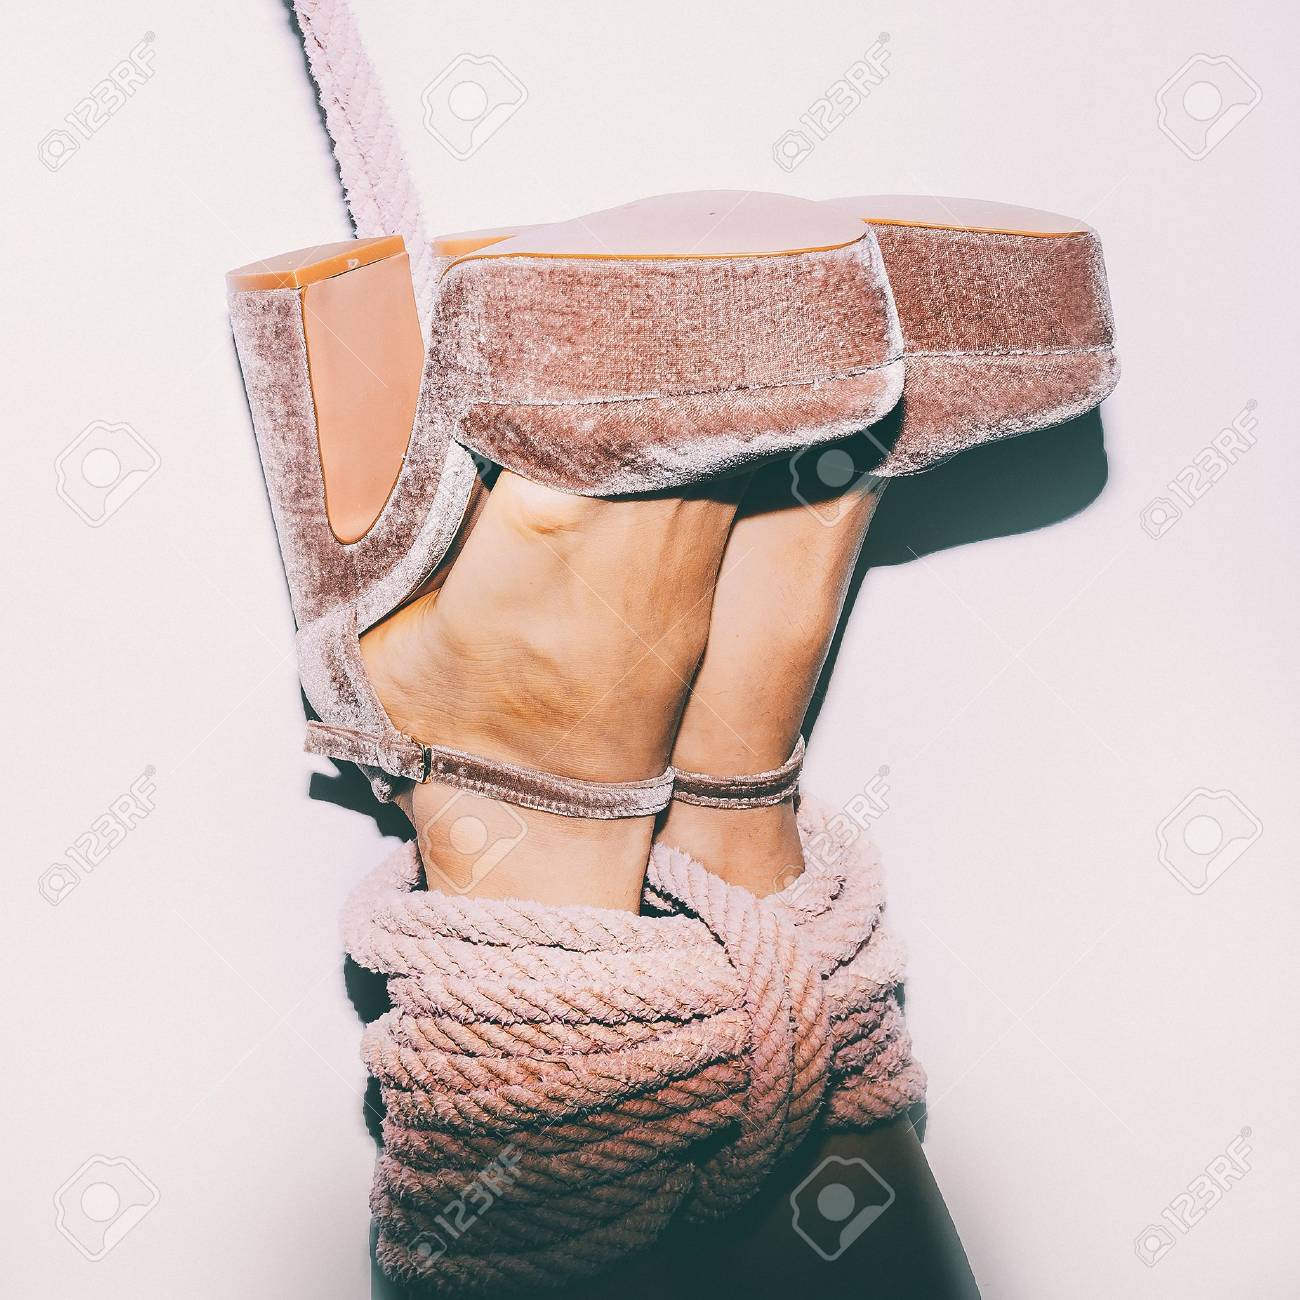 chrissy bond add women tied up in high heels photo